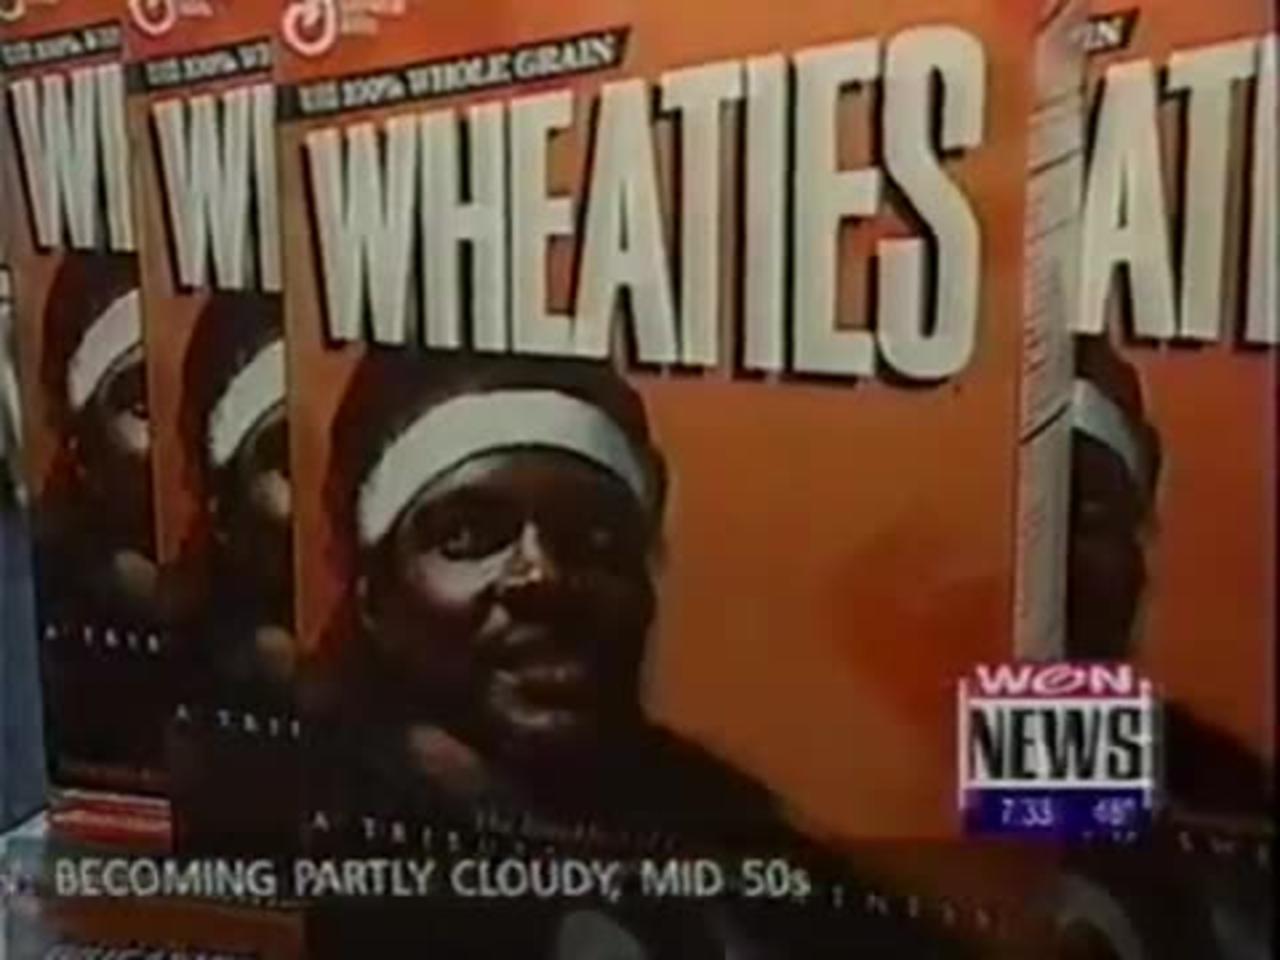 February 29, 2000 - Walter Payton Remembered on New Wheaties Box